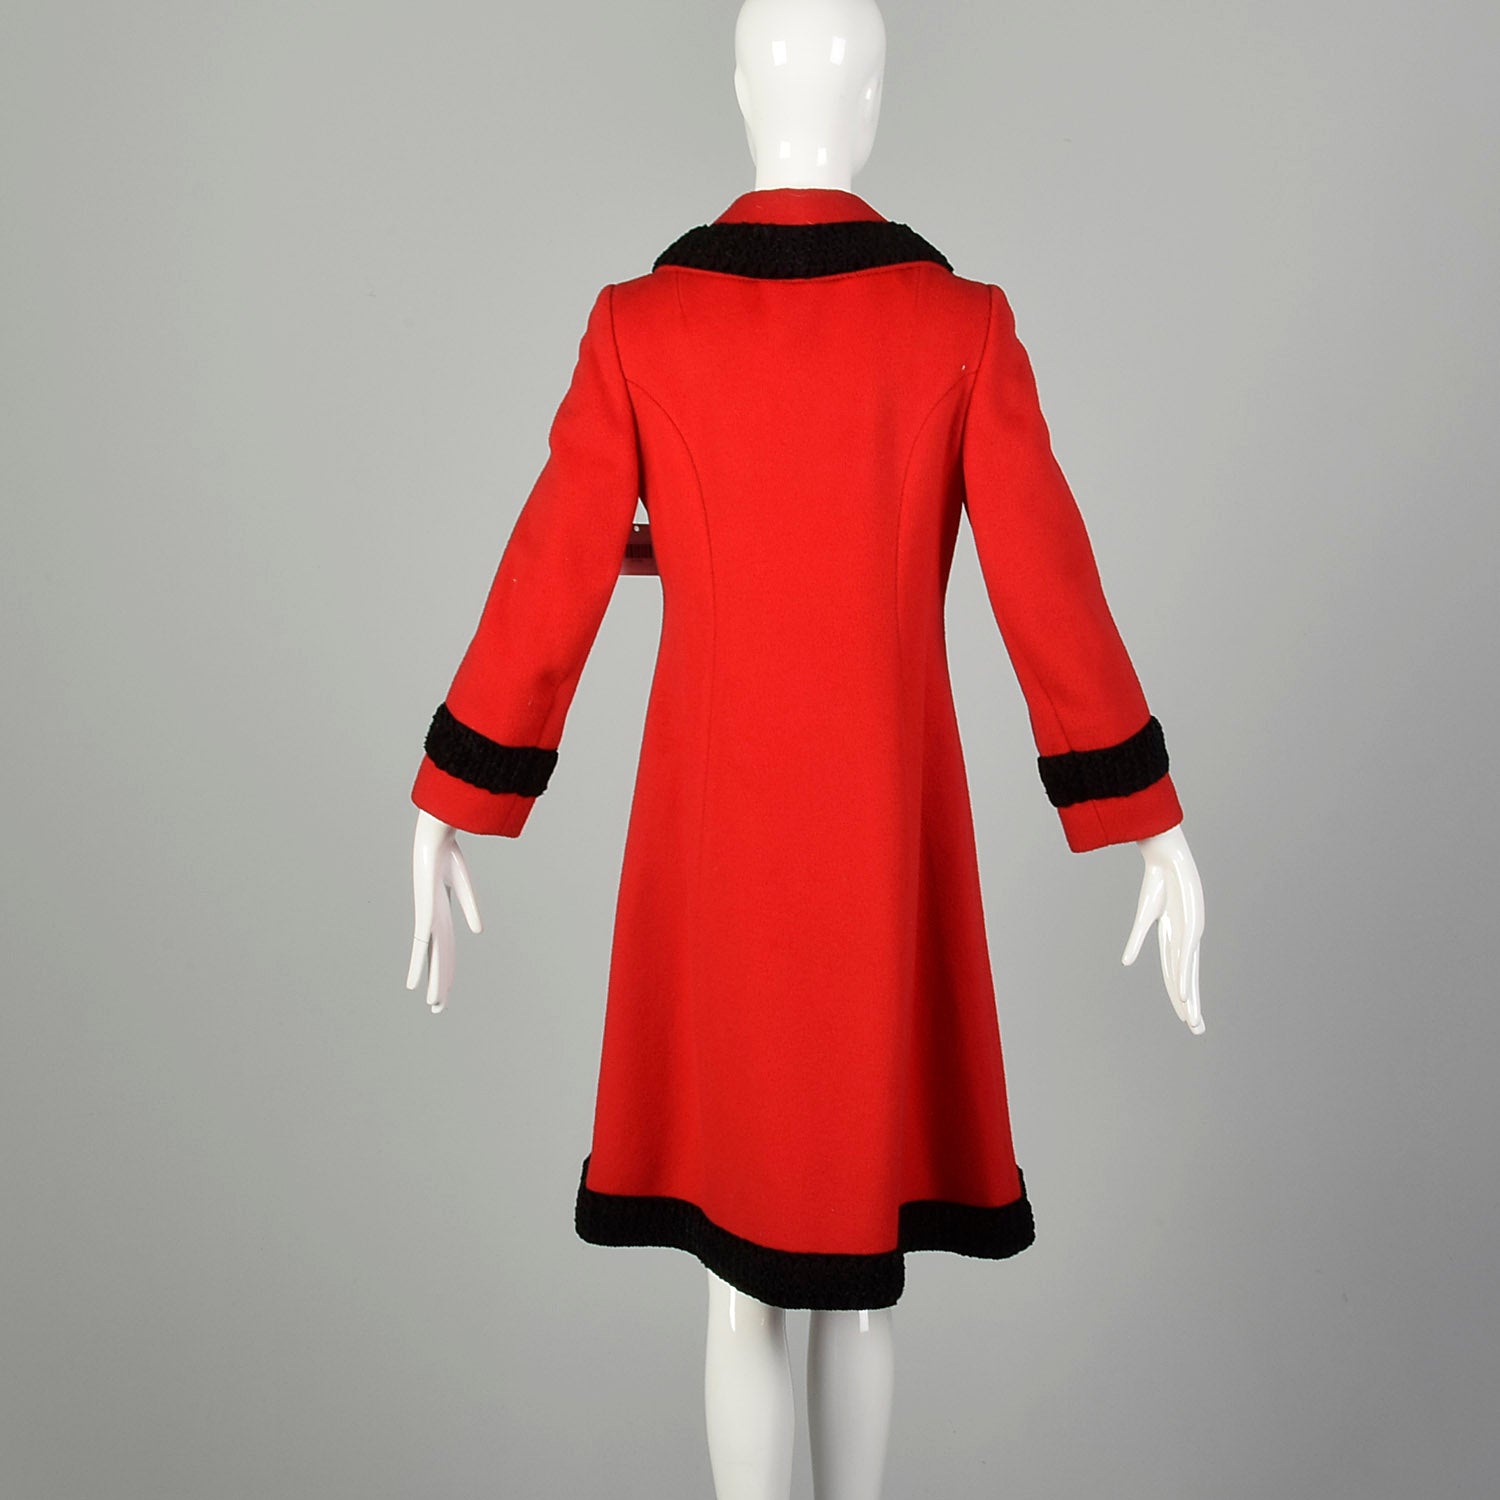 Small 1960s Coat Red Mod Russian Princess Faux Persian Lamb Fur Winter Holiday